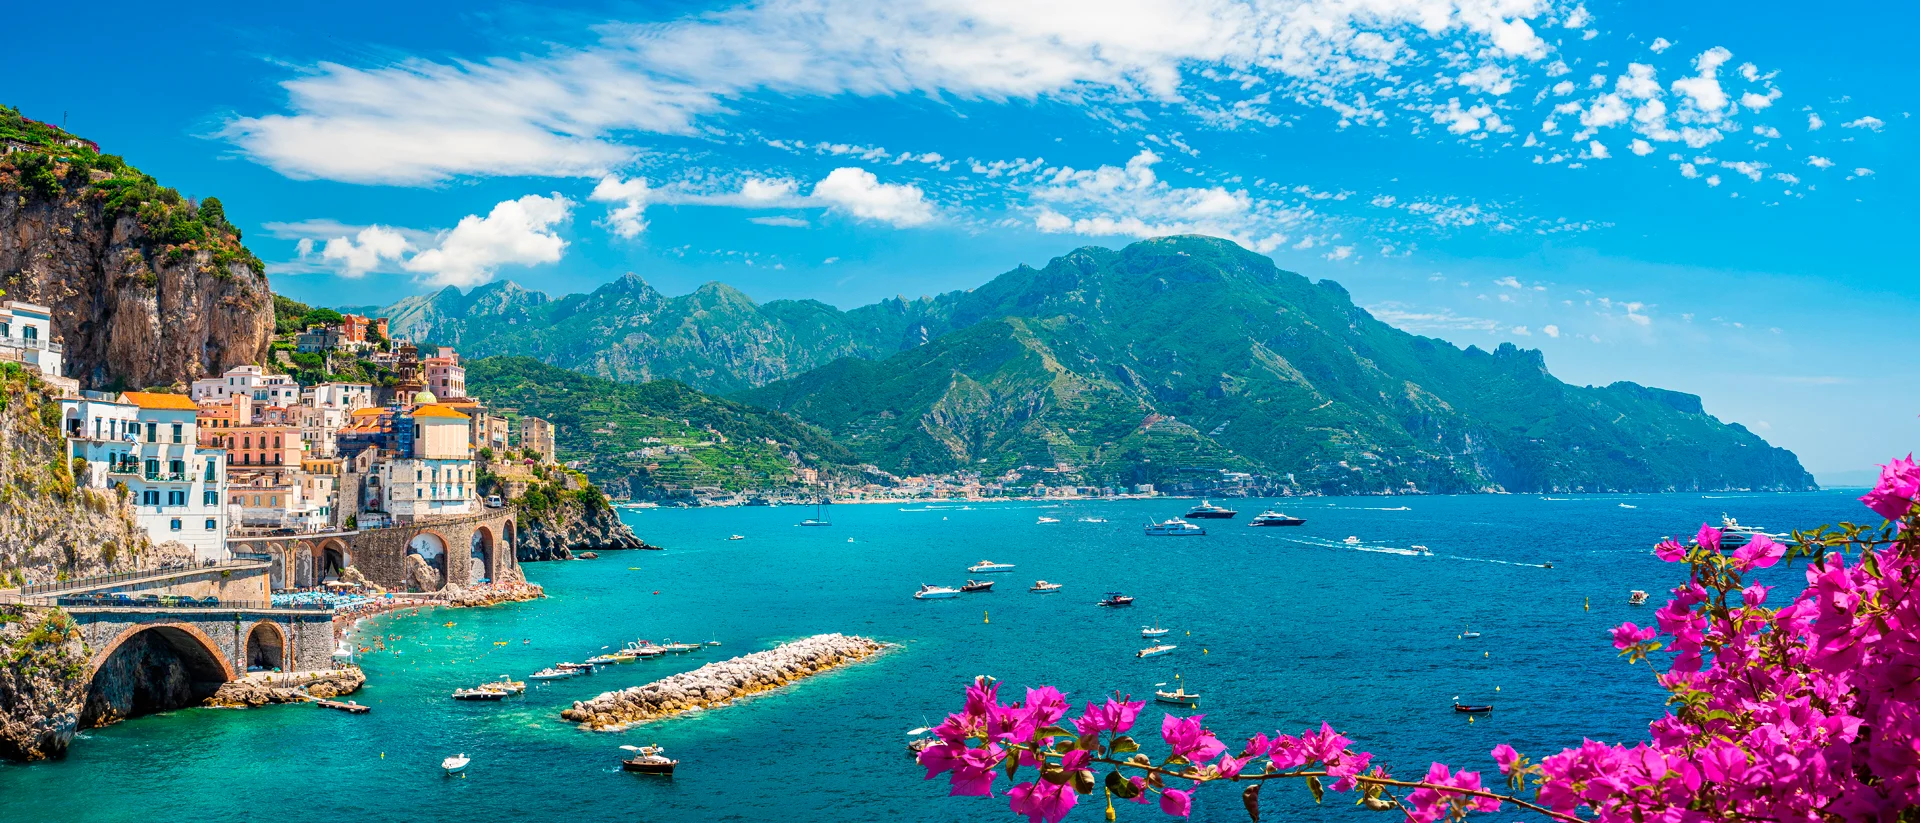 Naples crystal water coast natural mountains